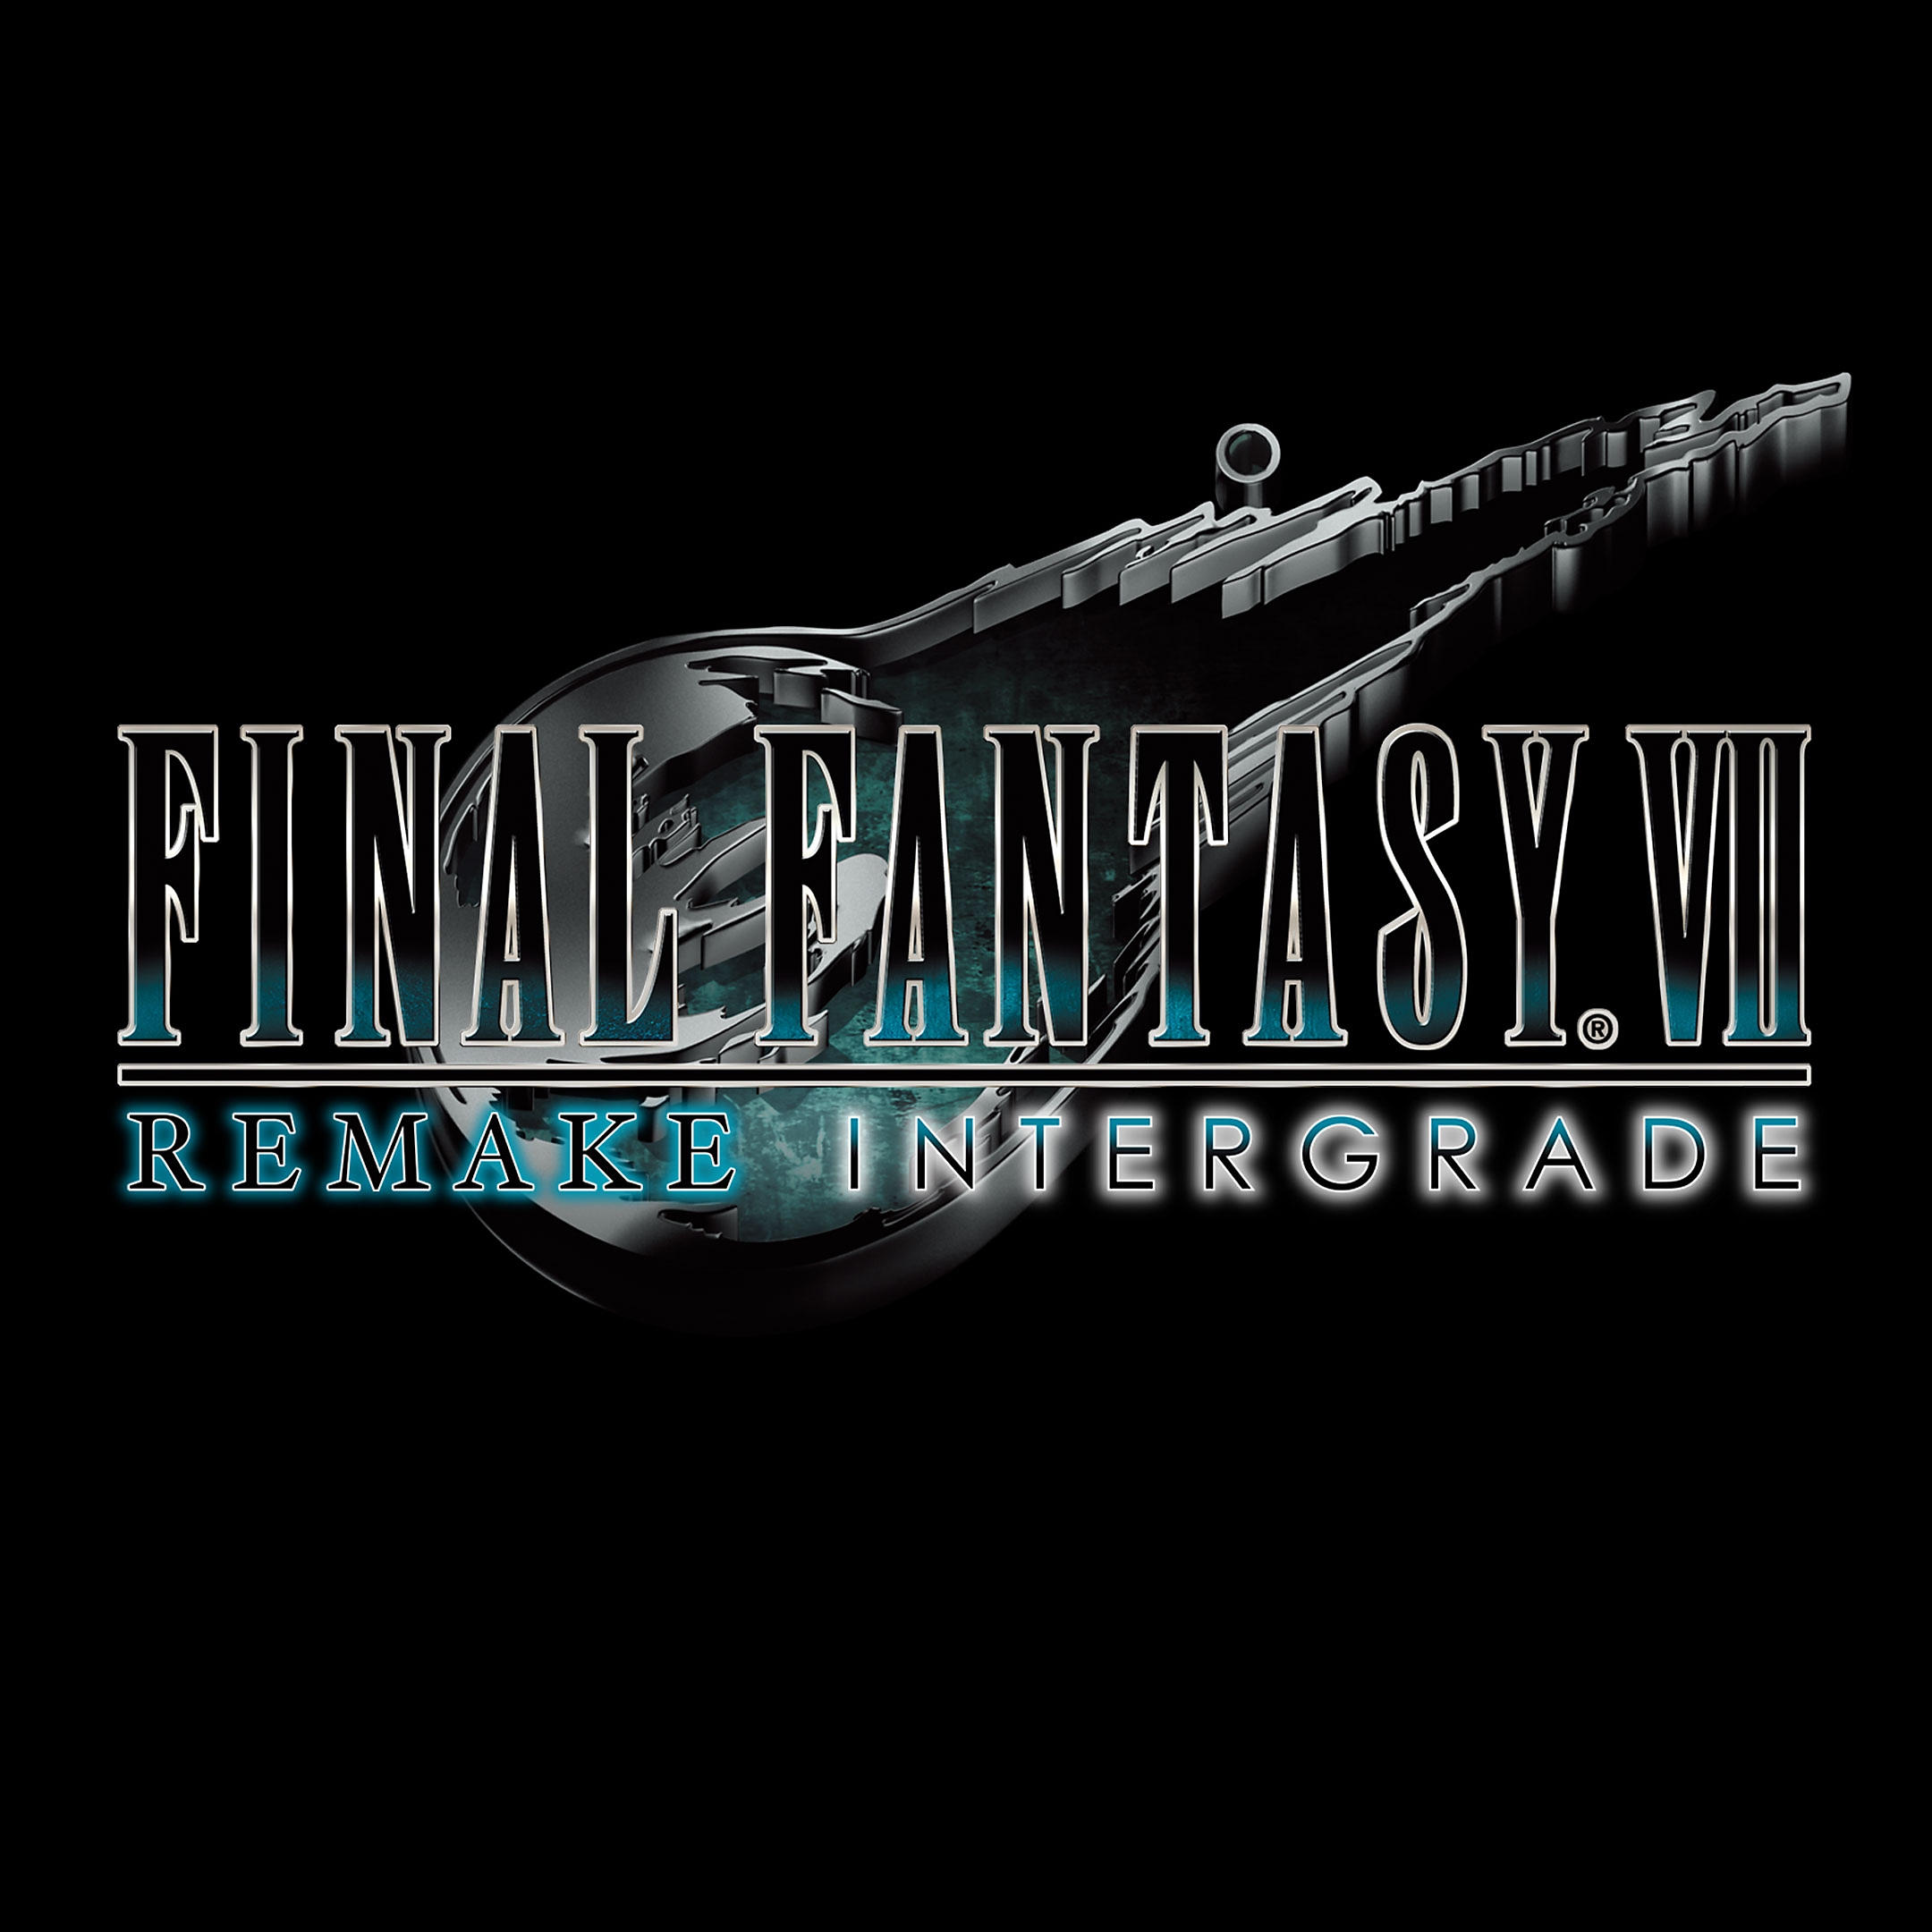 FINAL FANTASY VII REMAKE INTERGRADE - Immagine Store Standard Edition